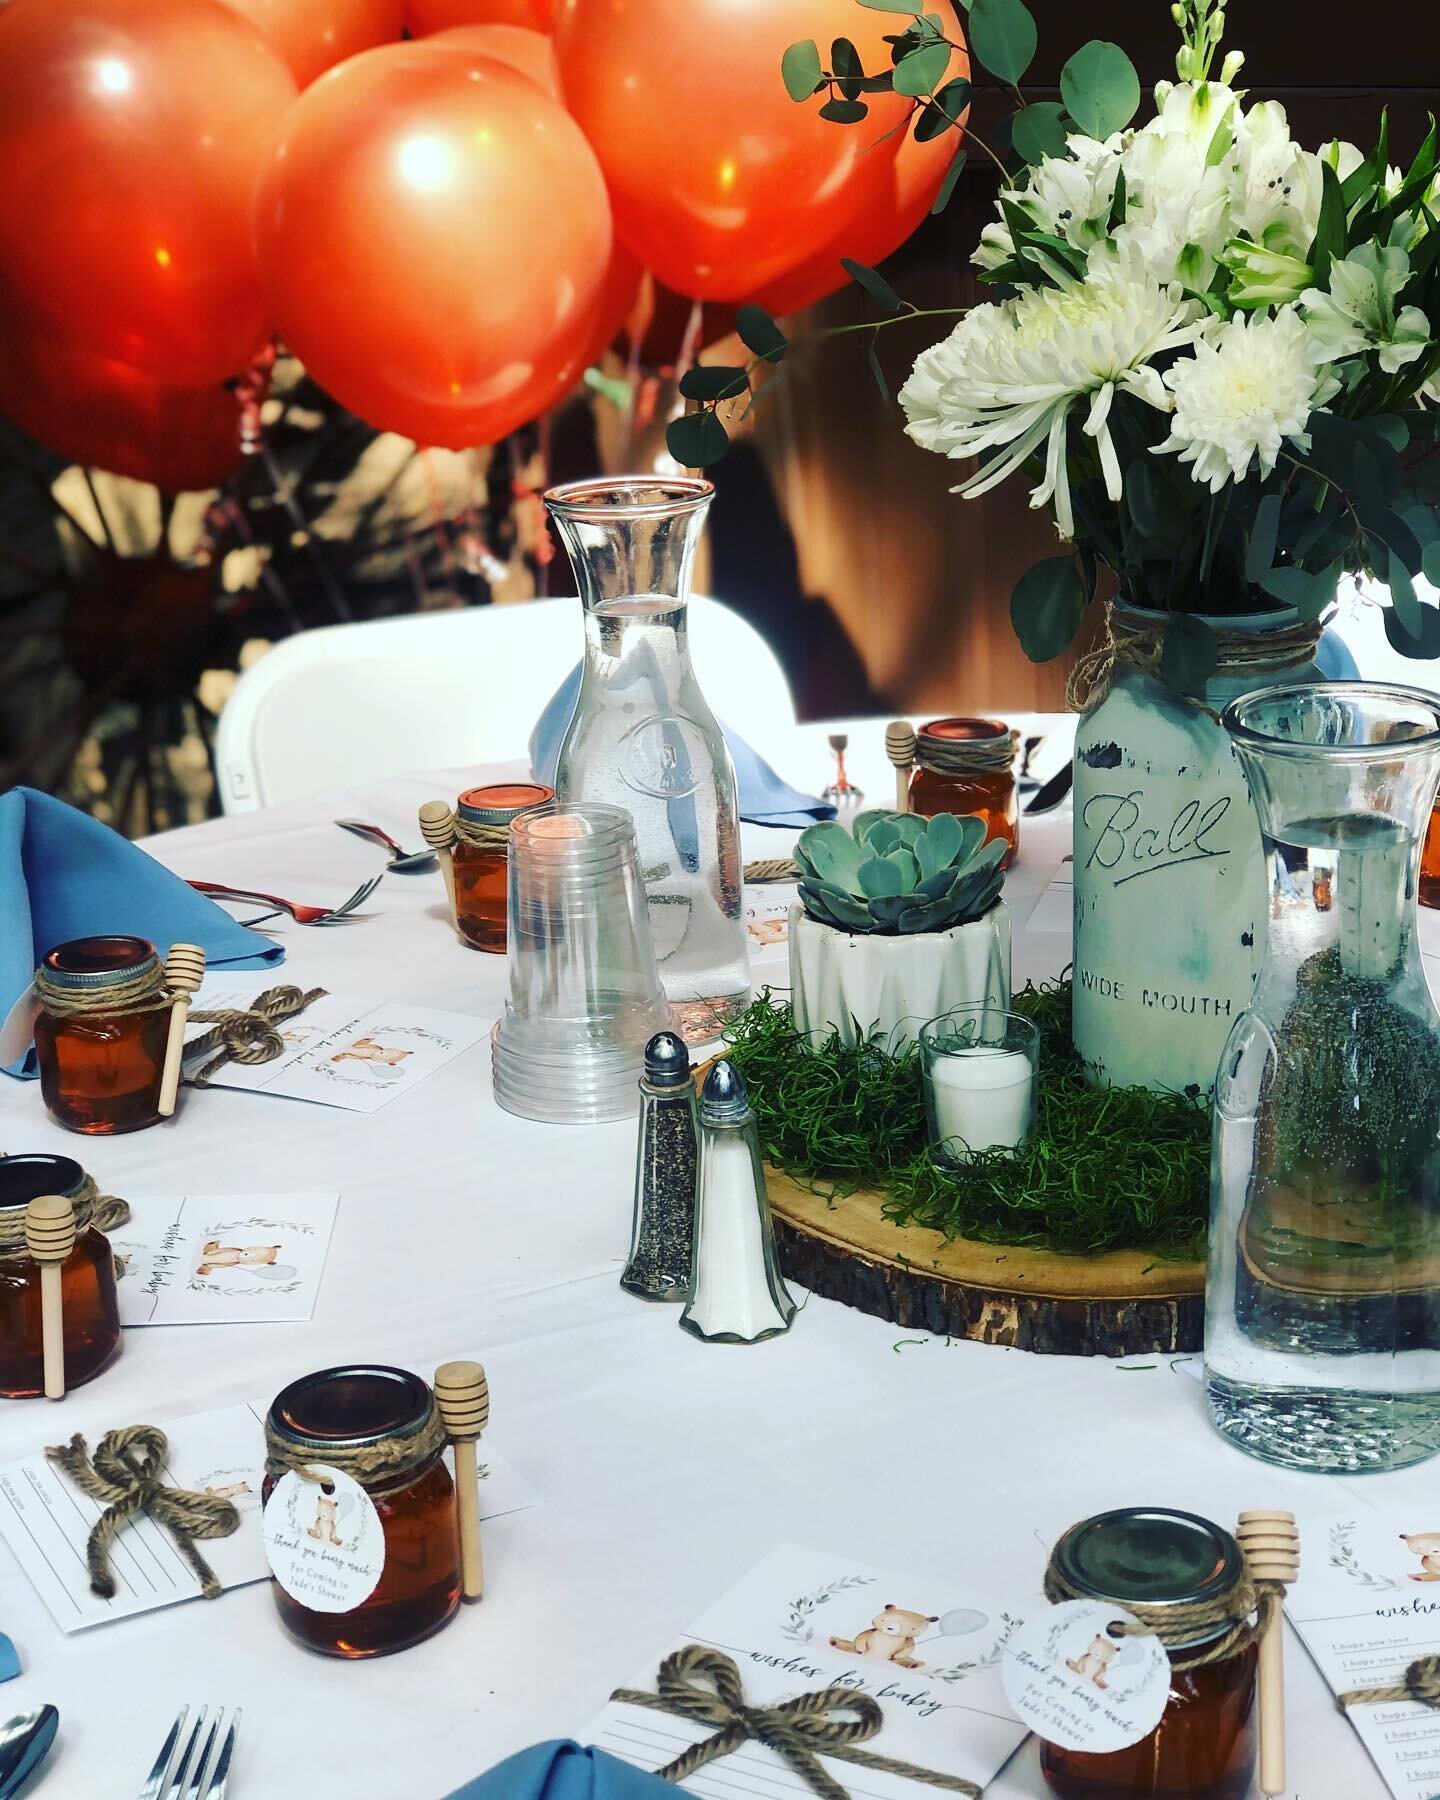 Inspiration 💐 
#celebrate 
#celebrate🥂 
#telfordpa 
#parestaurants 
#restaurants 
#partytime💃 
#weddingvenue 
#specialevents 
#events
#centerpieces 
#centerpiecesideas 
#wedding 
#formal